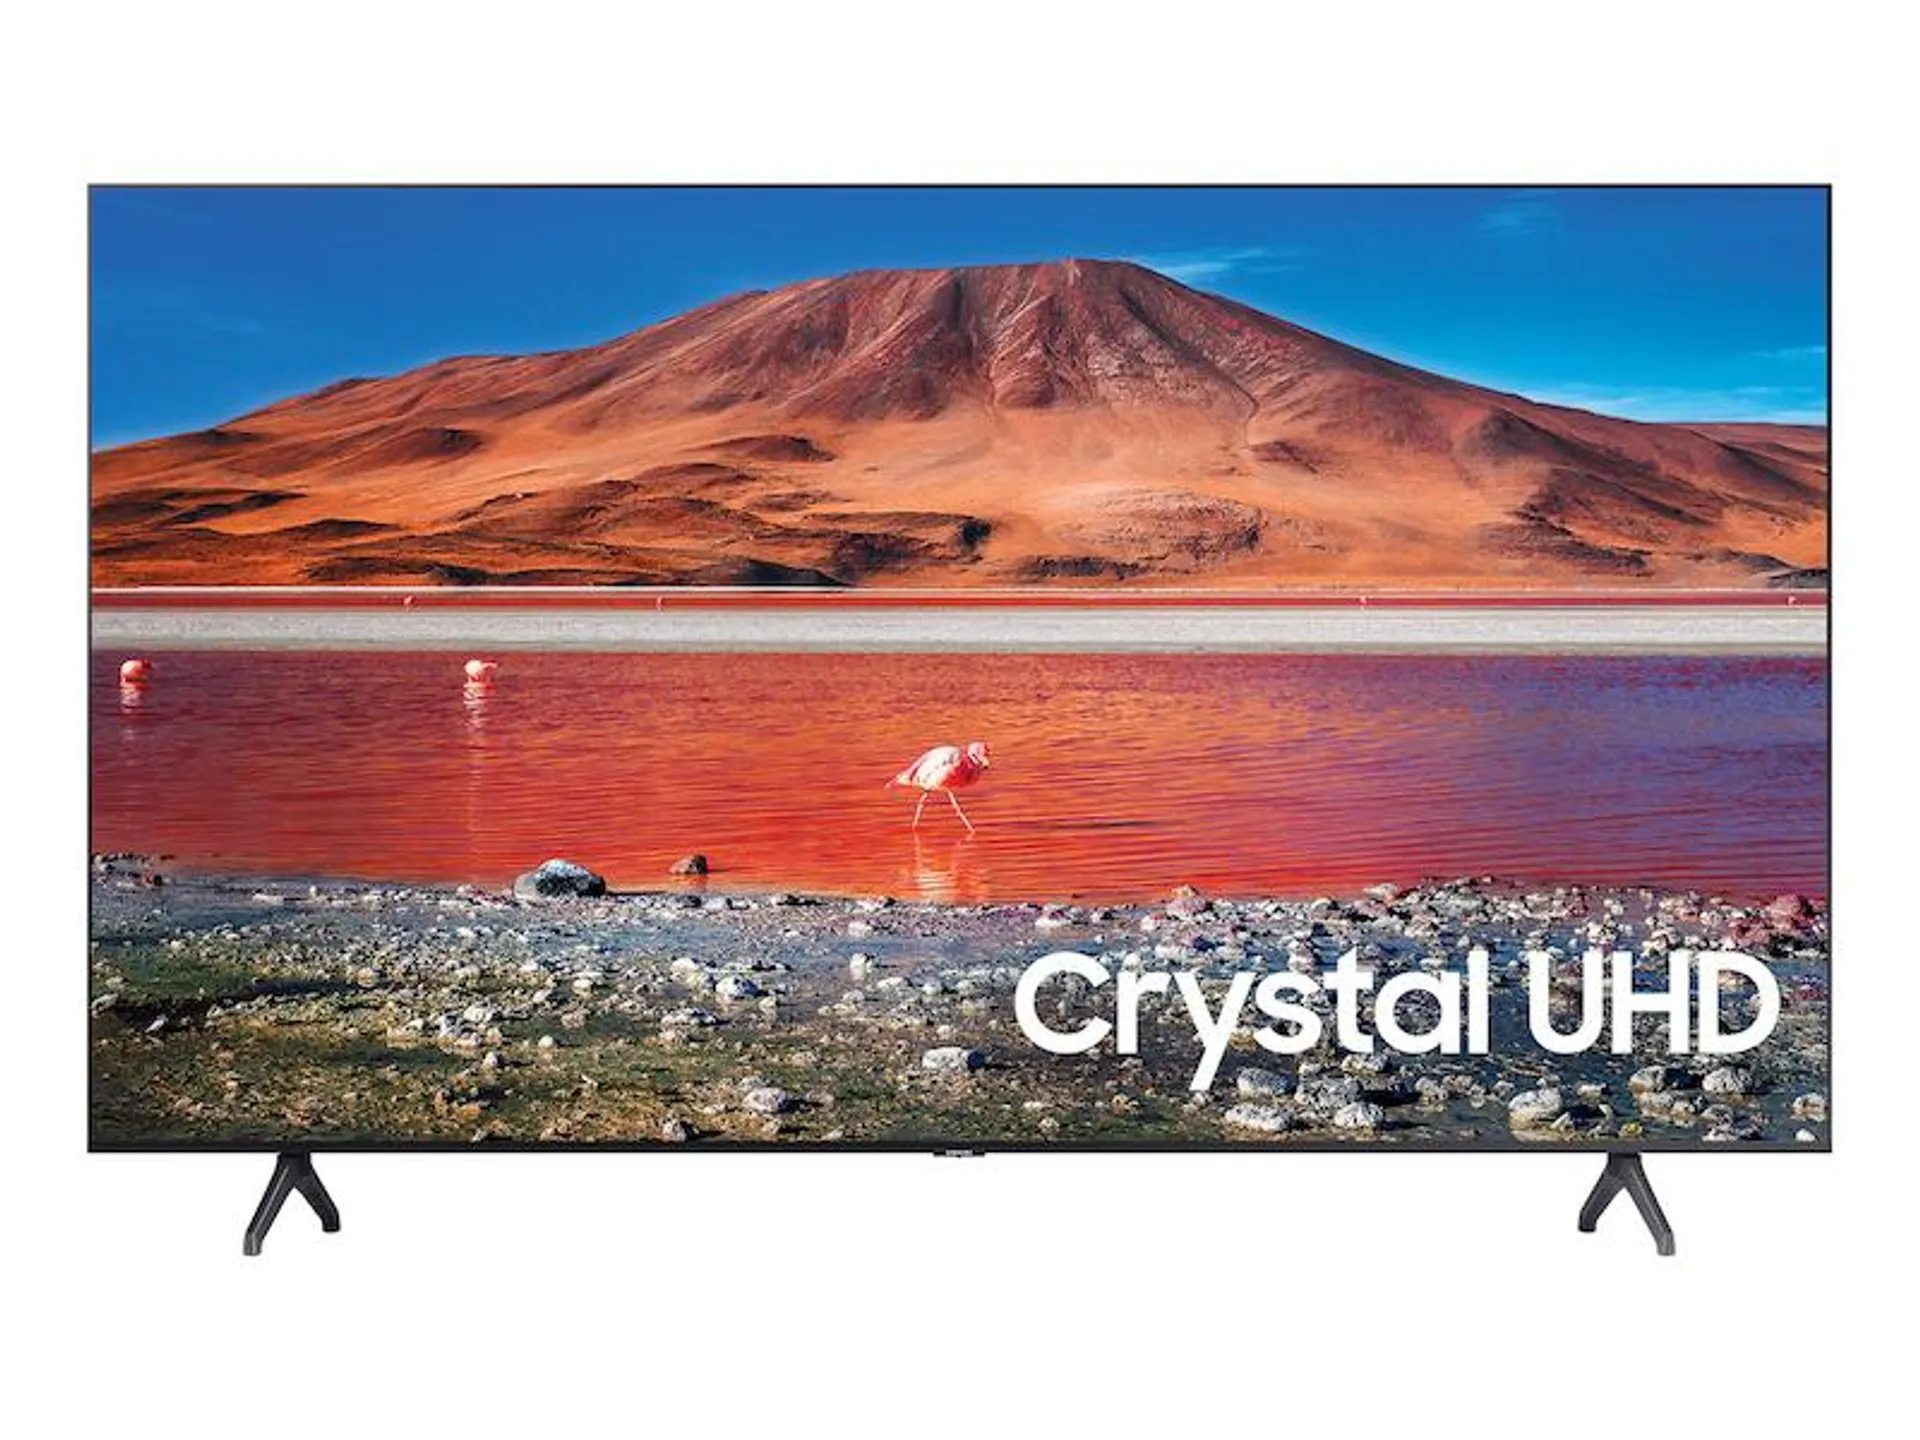 75" Class TU7000 Crystal UHD 4K Smart TV (2020)